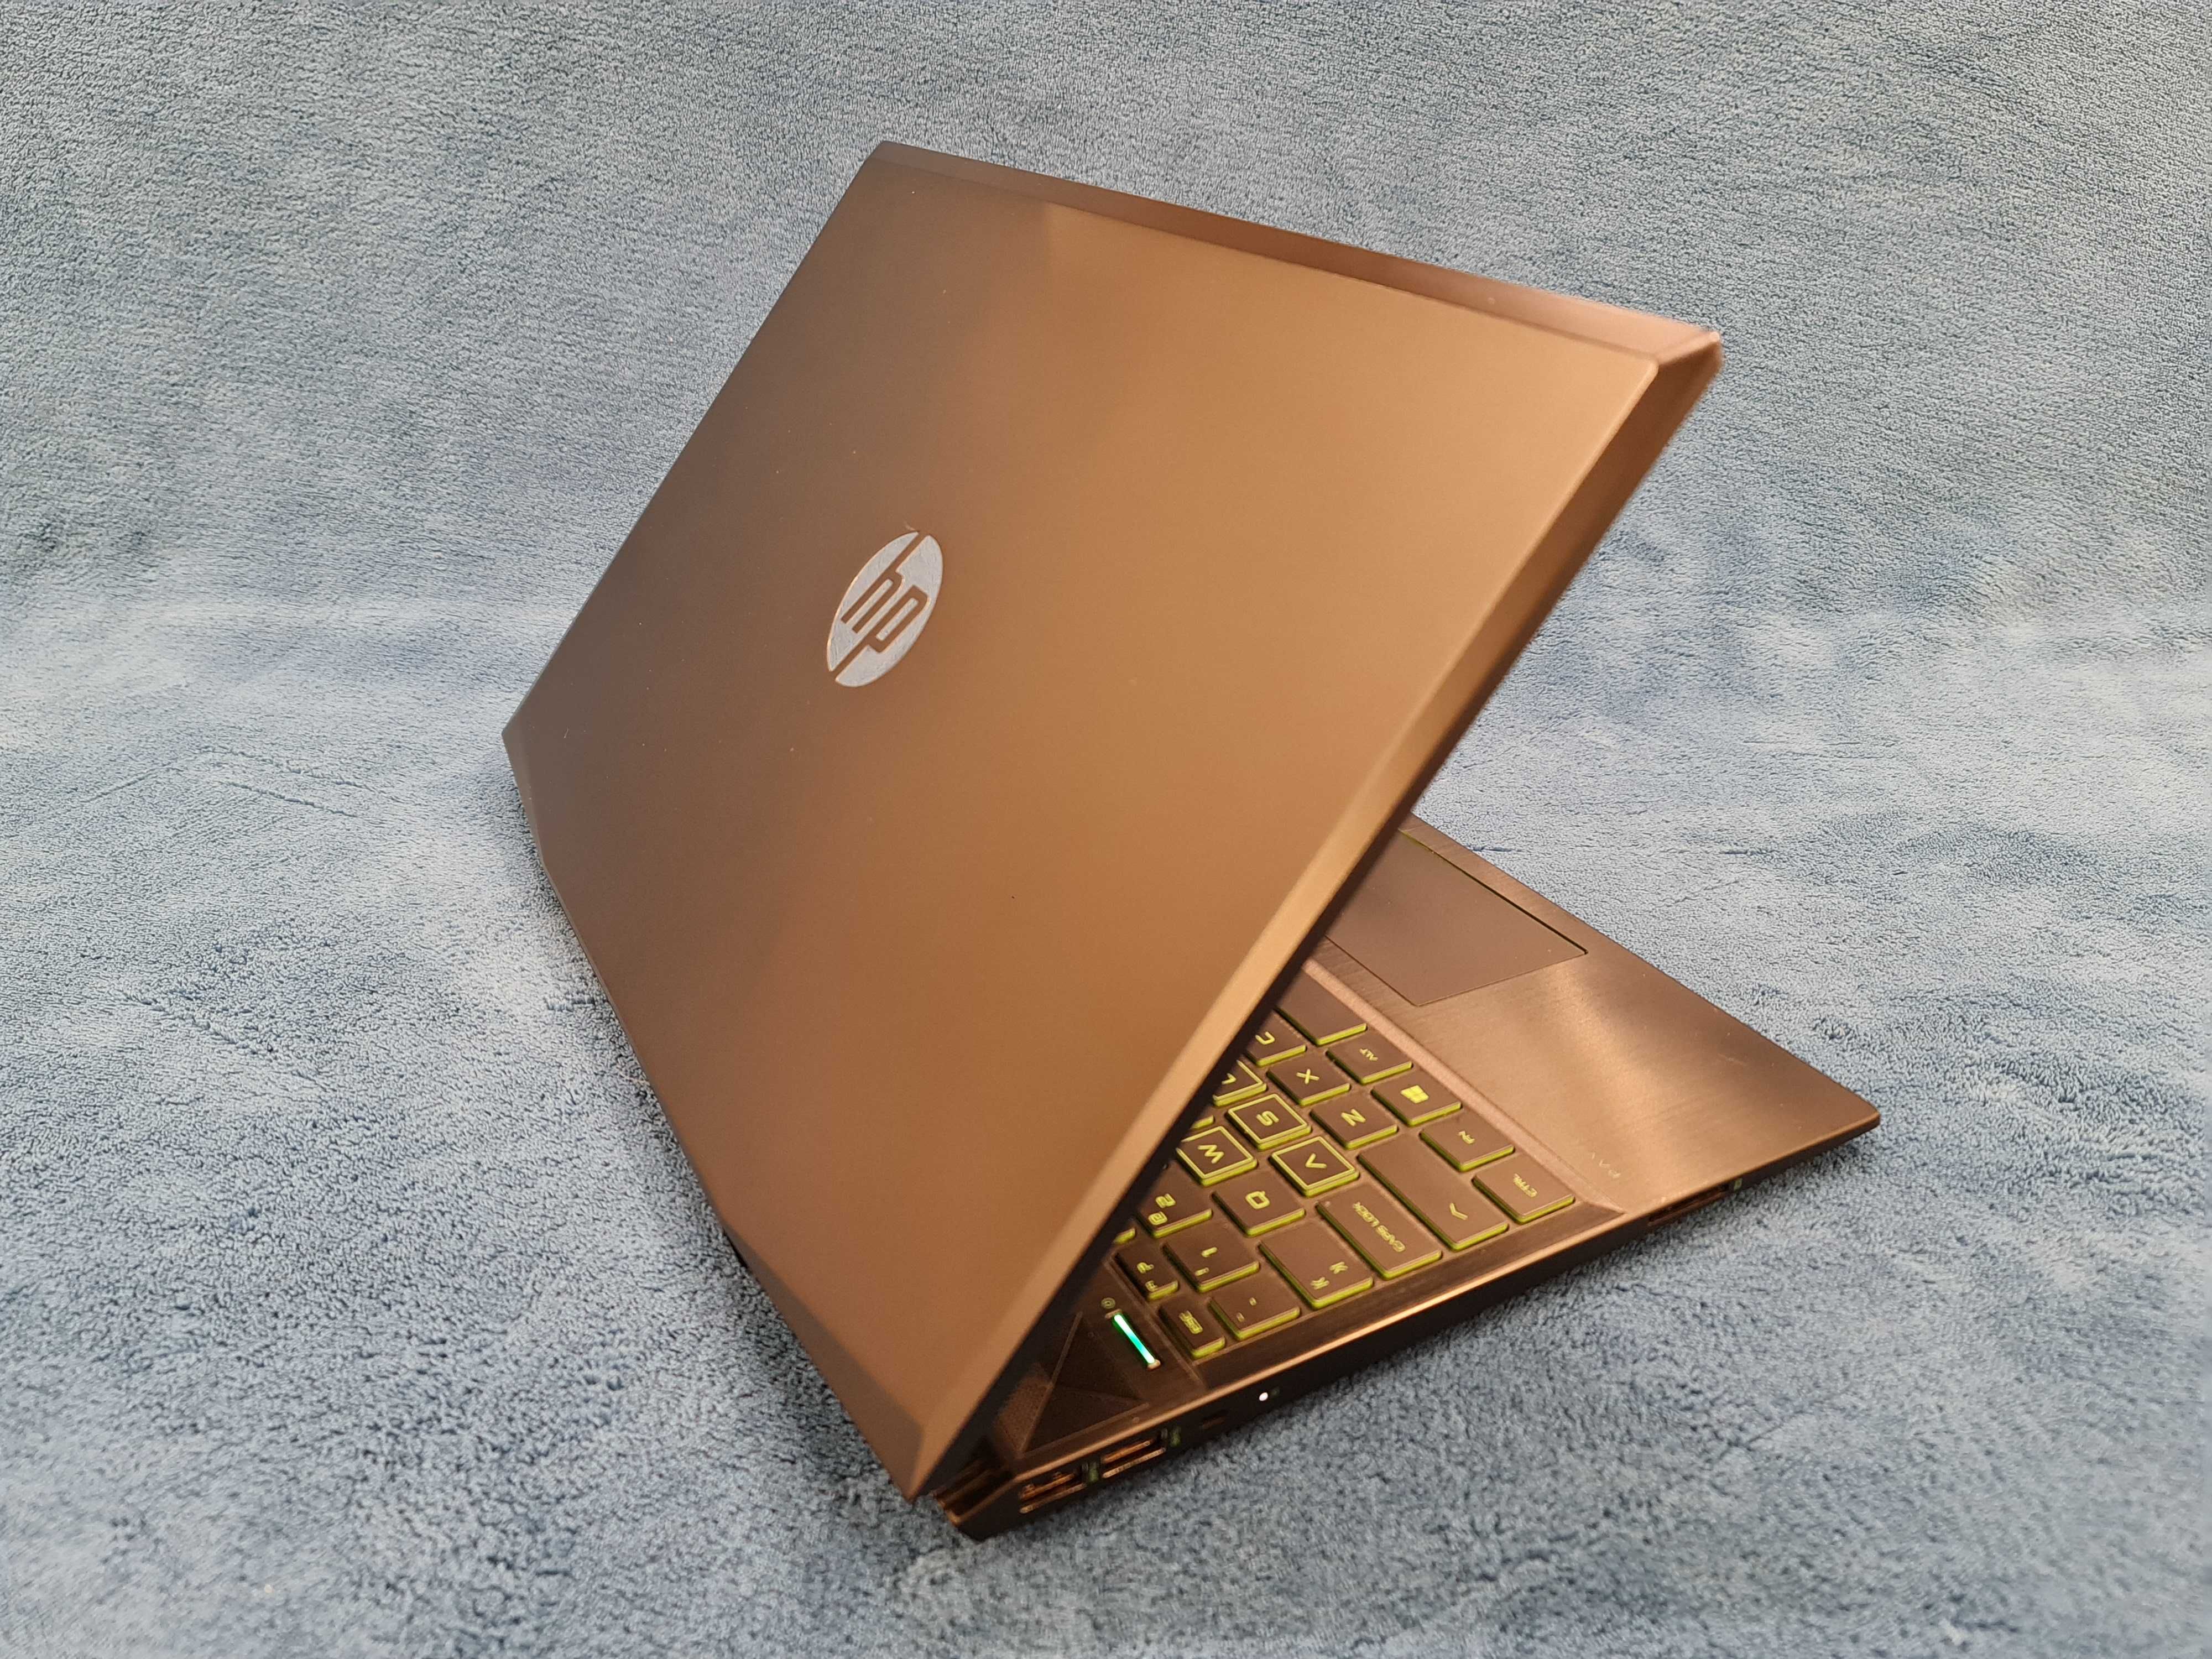 Laptop gaming nou HP, intel core- i7-8750H, video 4 gb NVIDIA